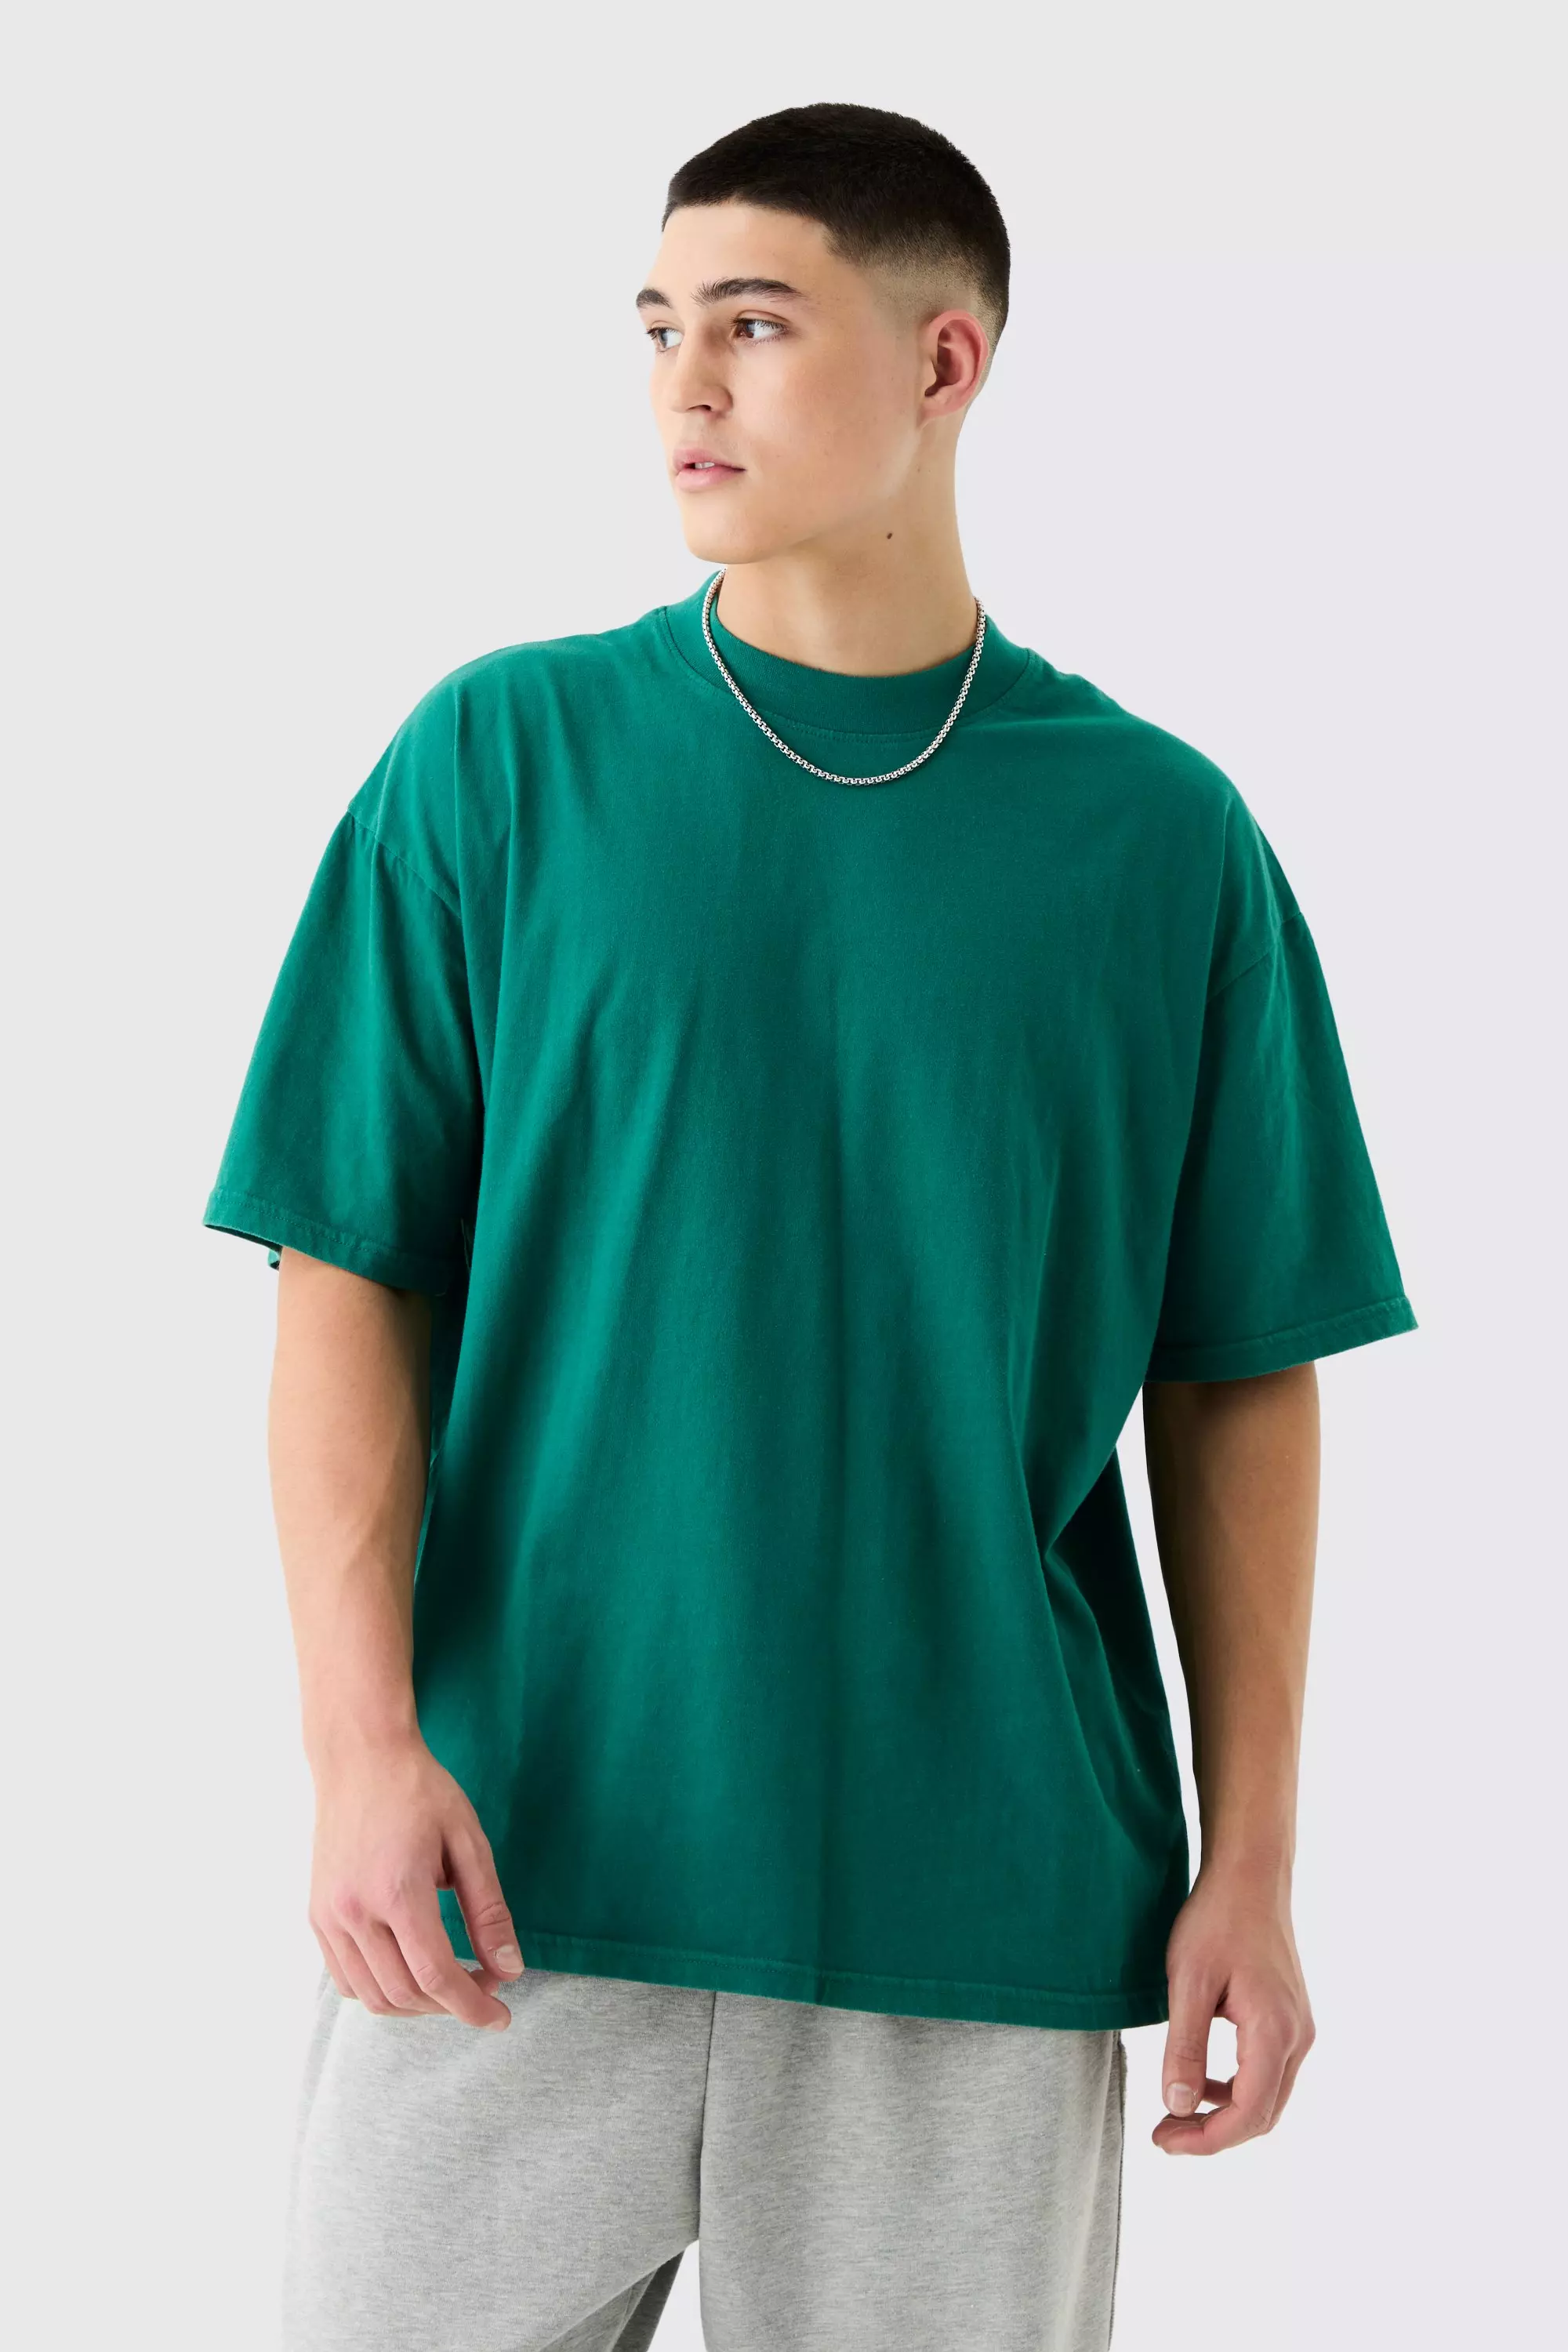 Teal Green Oversized Acid Wash T-shirt